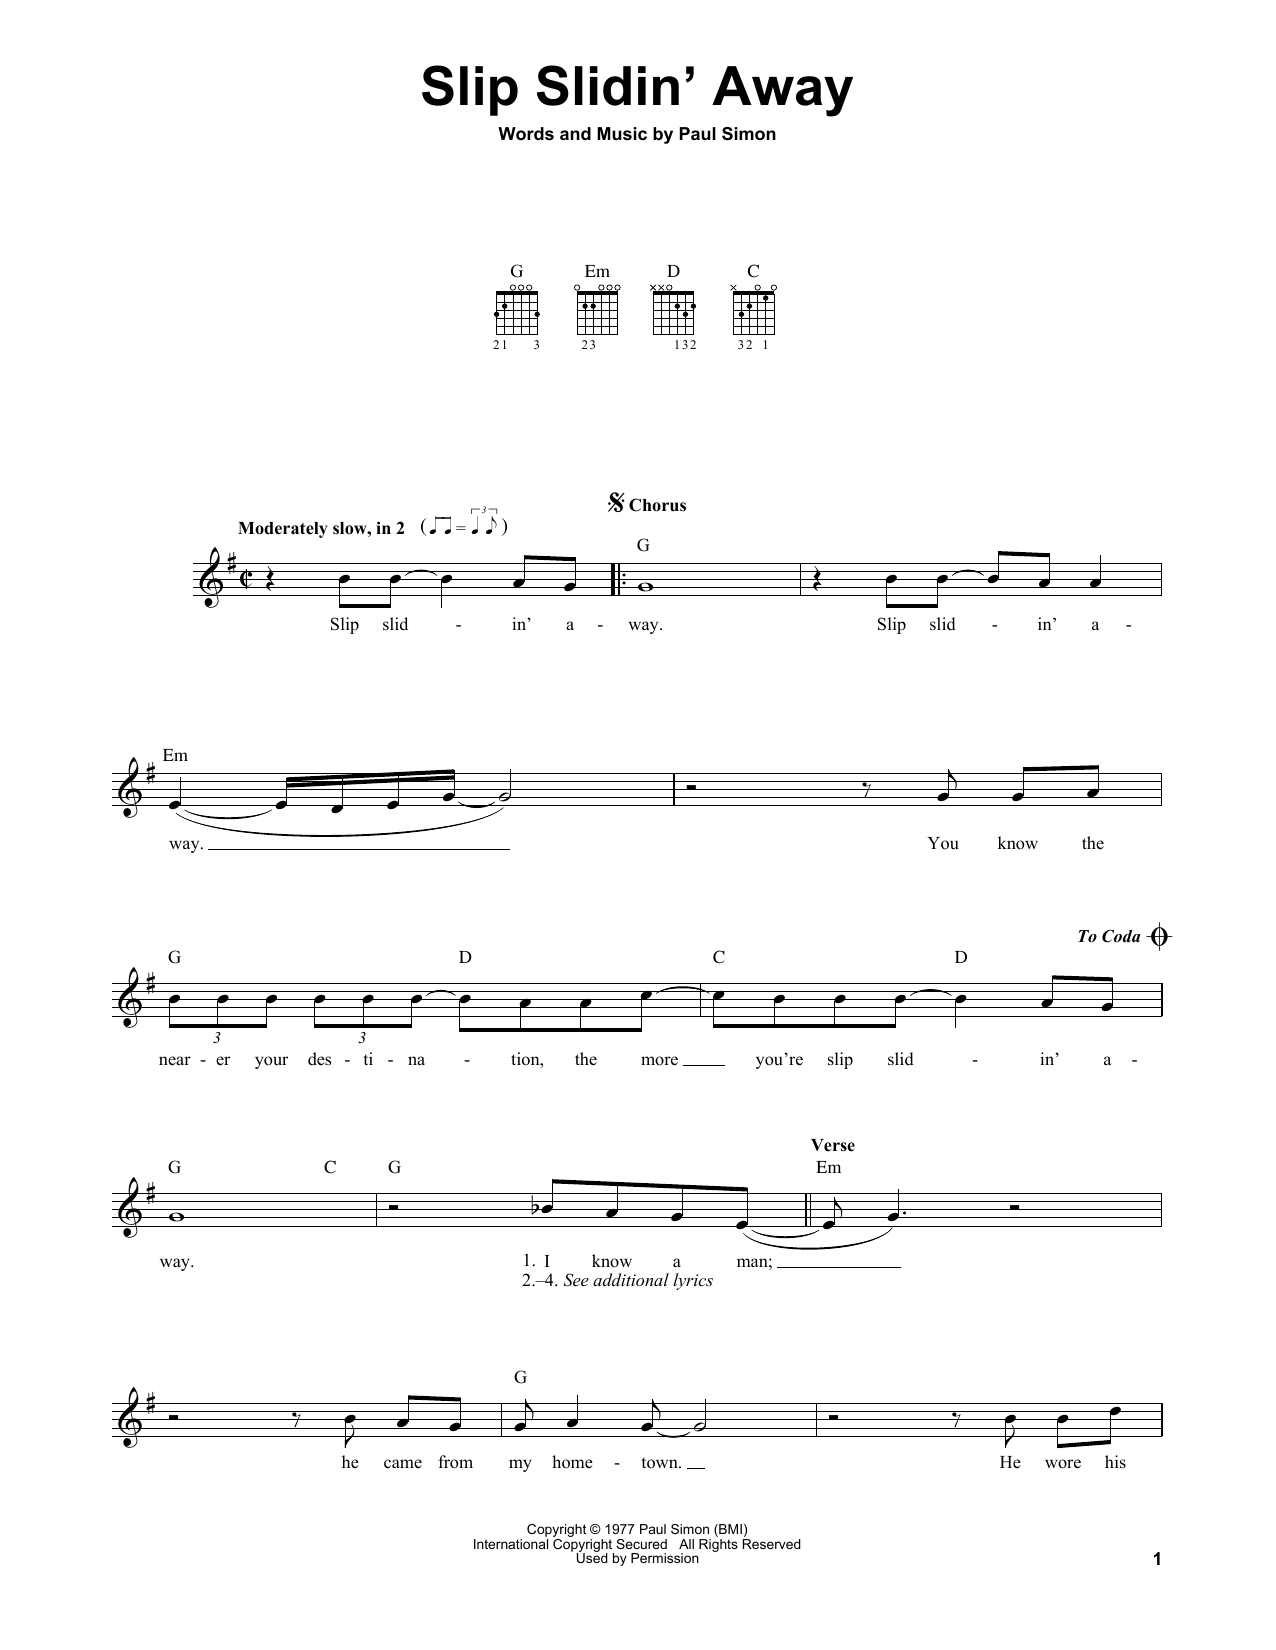 Download Simon & Garfunkel Slip Slidin' Away Sheet Music and learn how to play Ukulele PDF digital score in minutes